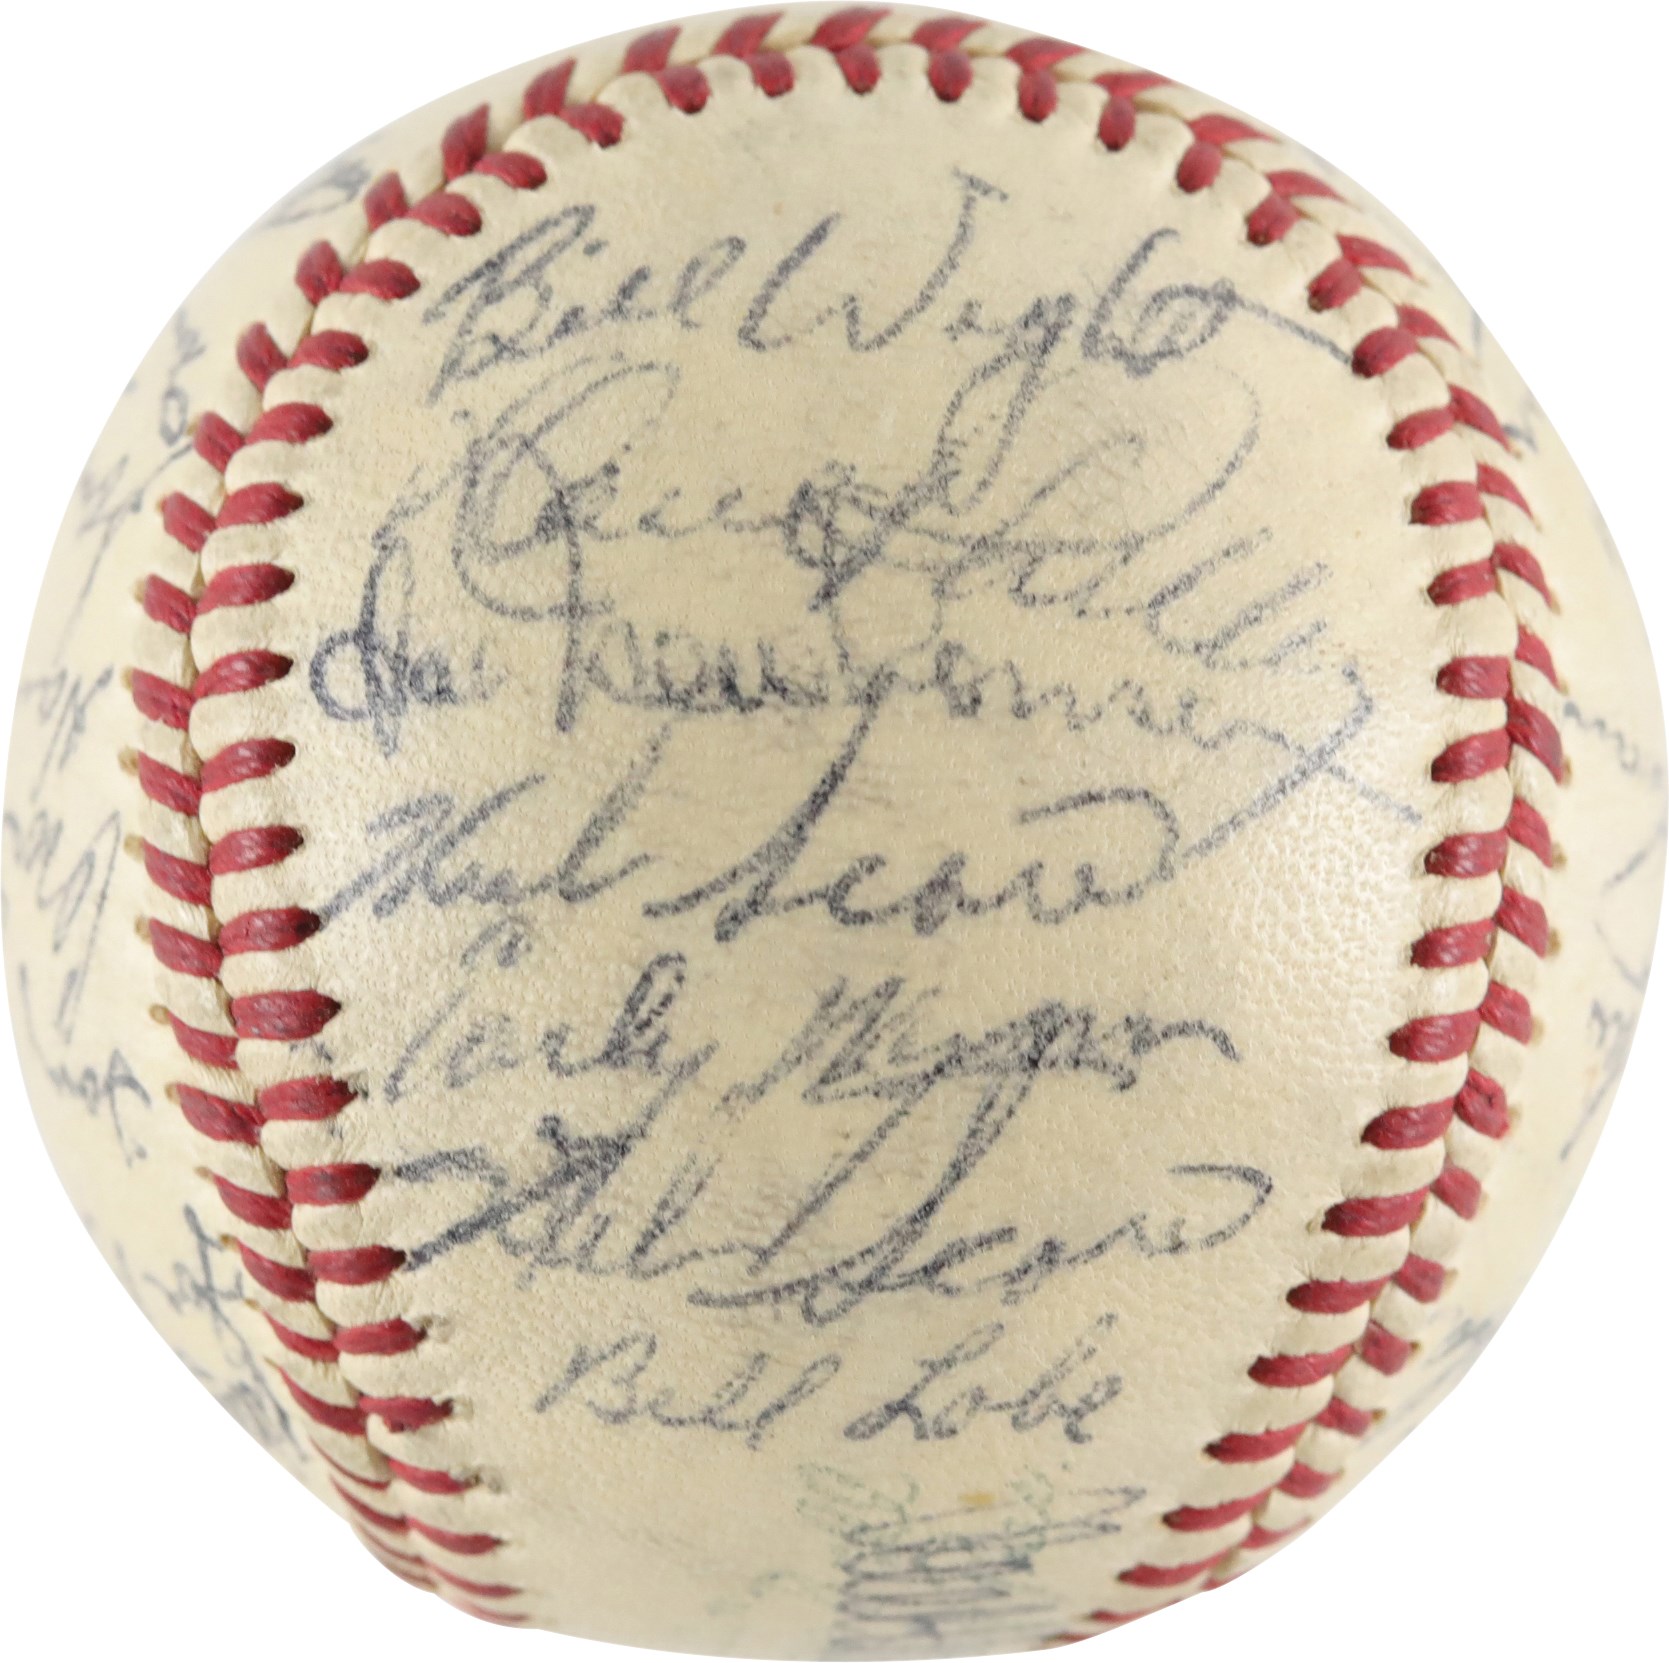 Baseball Autographs - 1955 Cleveland Indians High Grade Team-Signed Baseball w/Two Herb Score Rookie Autographs (PSA)